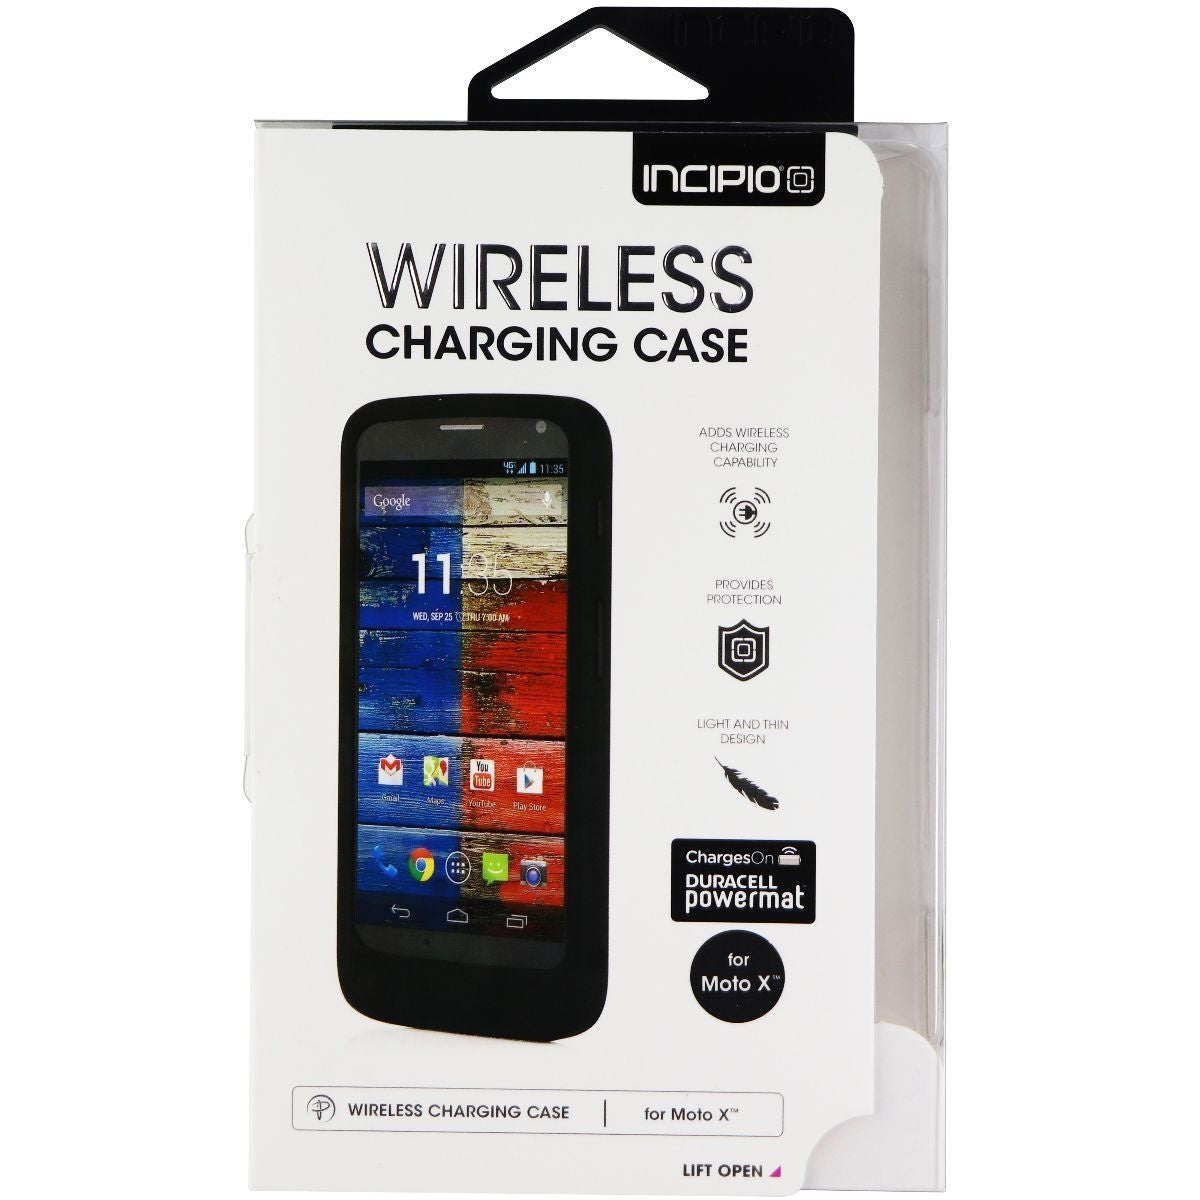 Incipio Wireless PMA Charging Case for Motorola Moto X - Black Cell Phone - Cases, Covers & Skins Incipio    - Simple Cell Bulk Wholesale Pricing - USA Seller